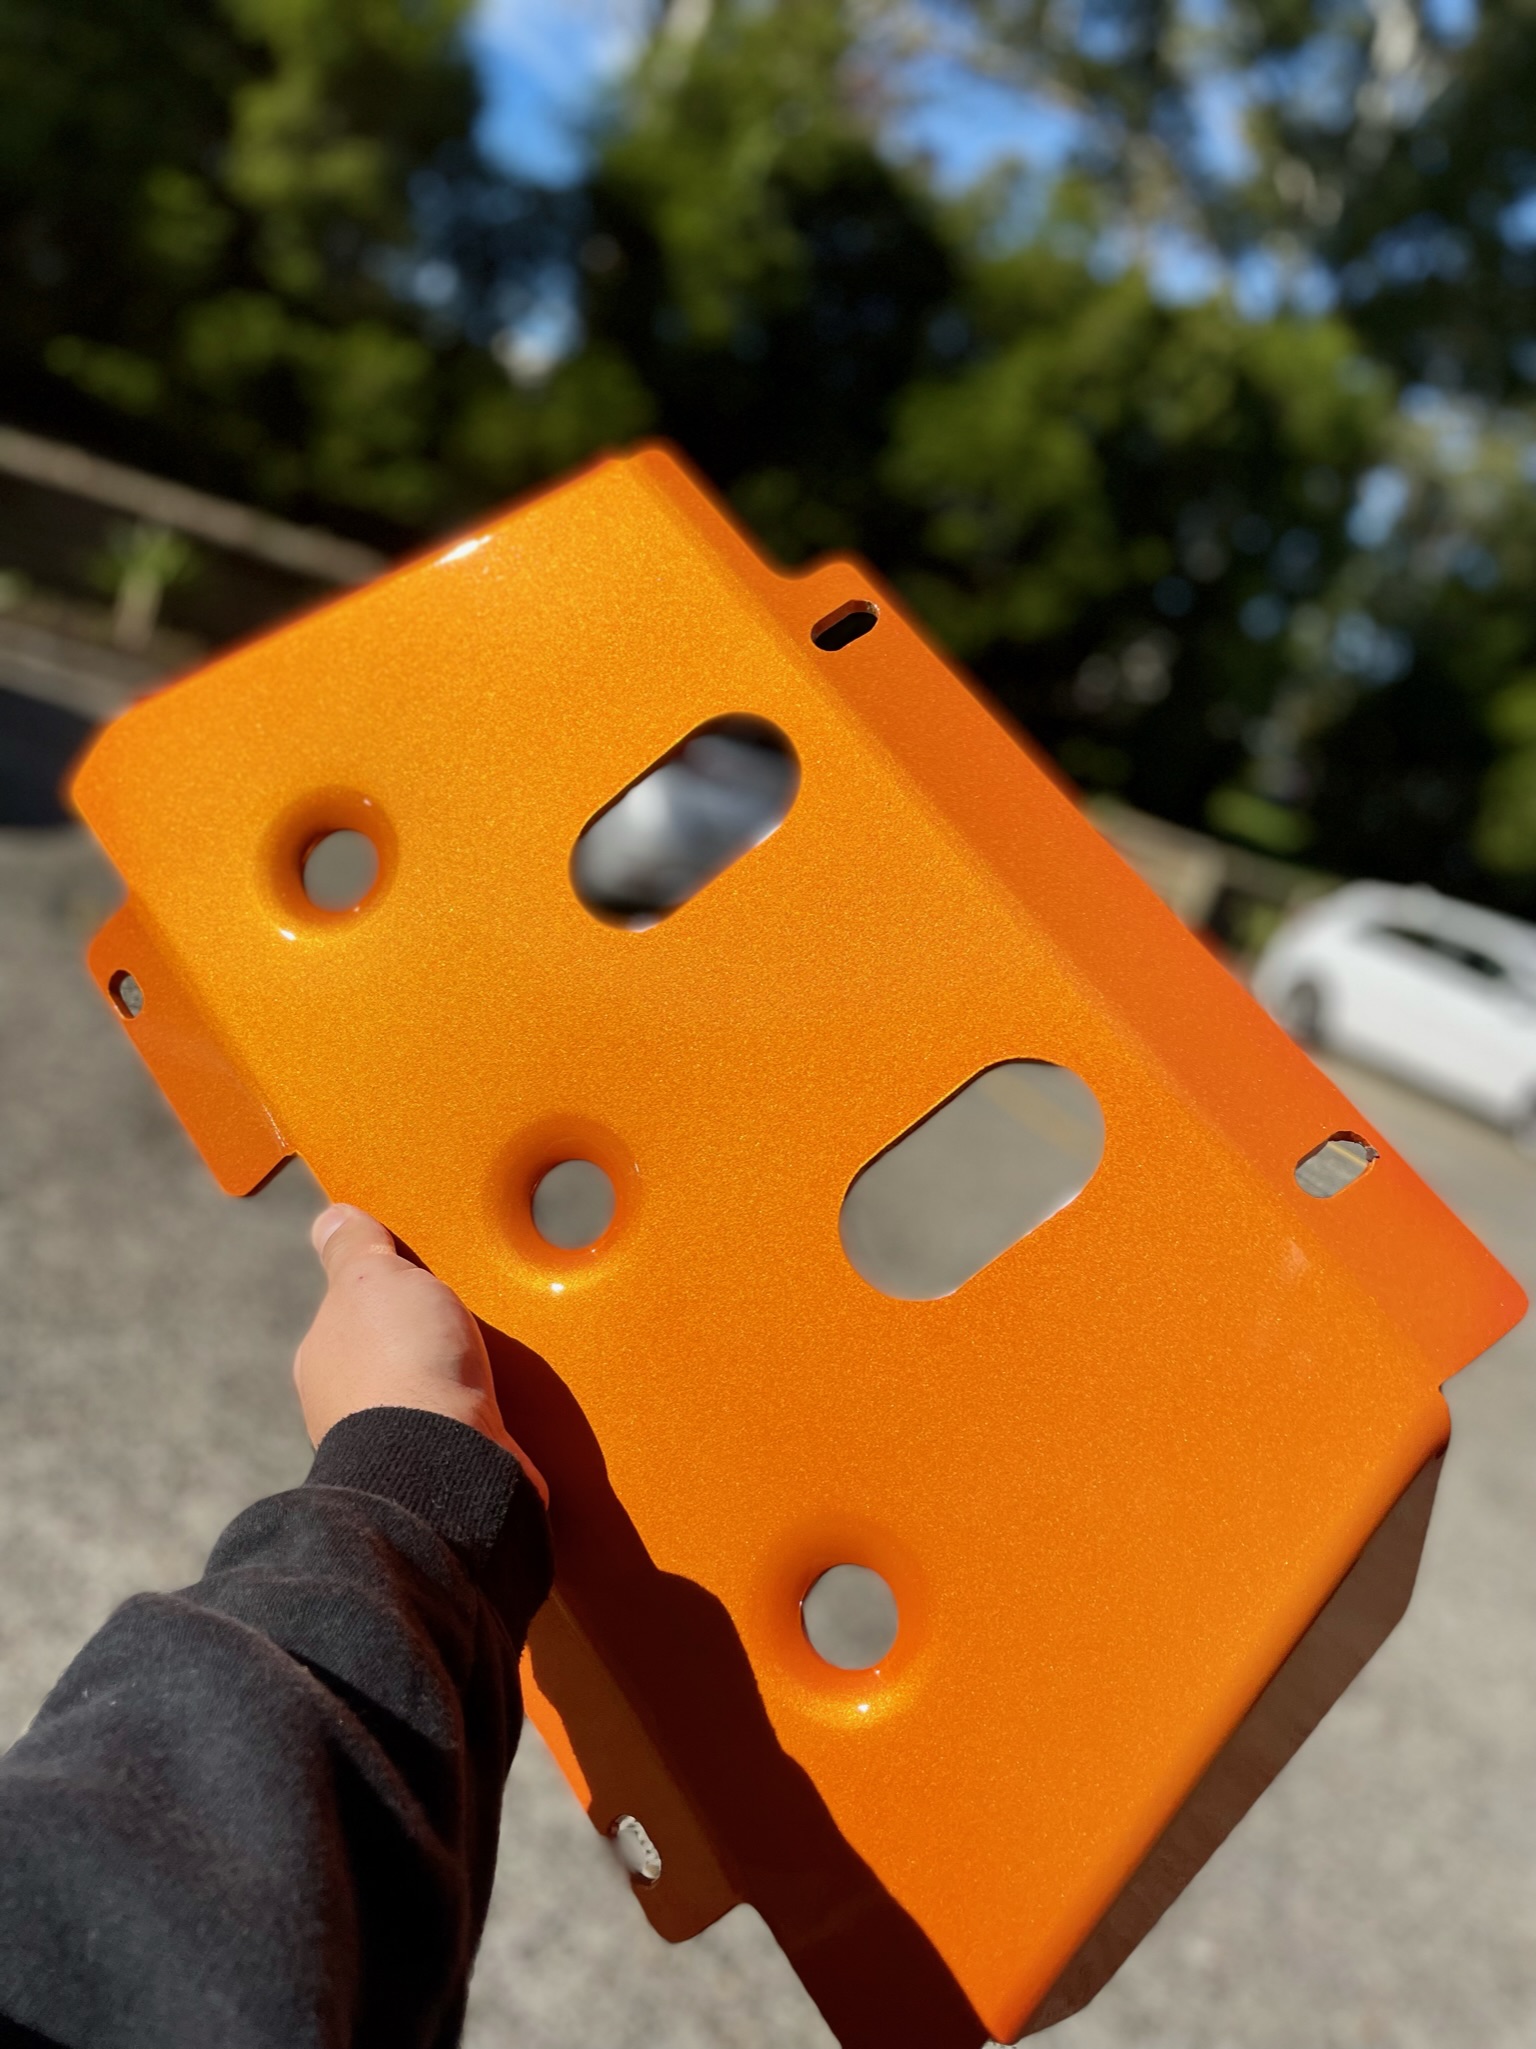 Powder coated orange car part